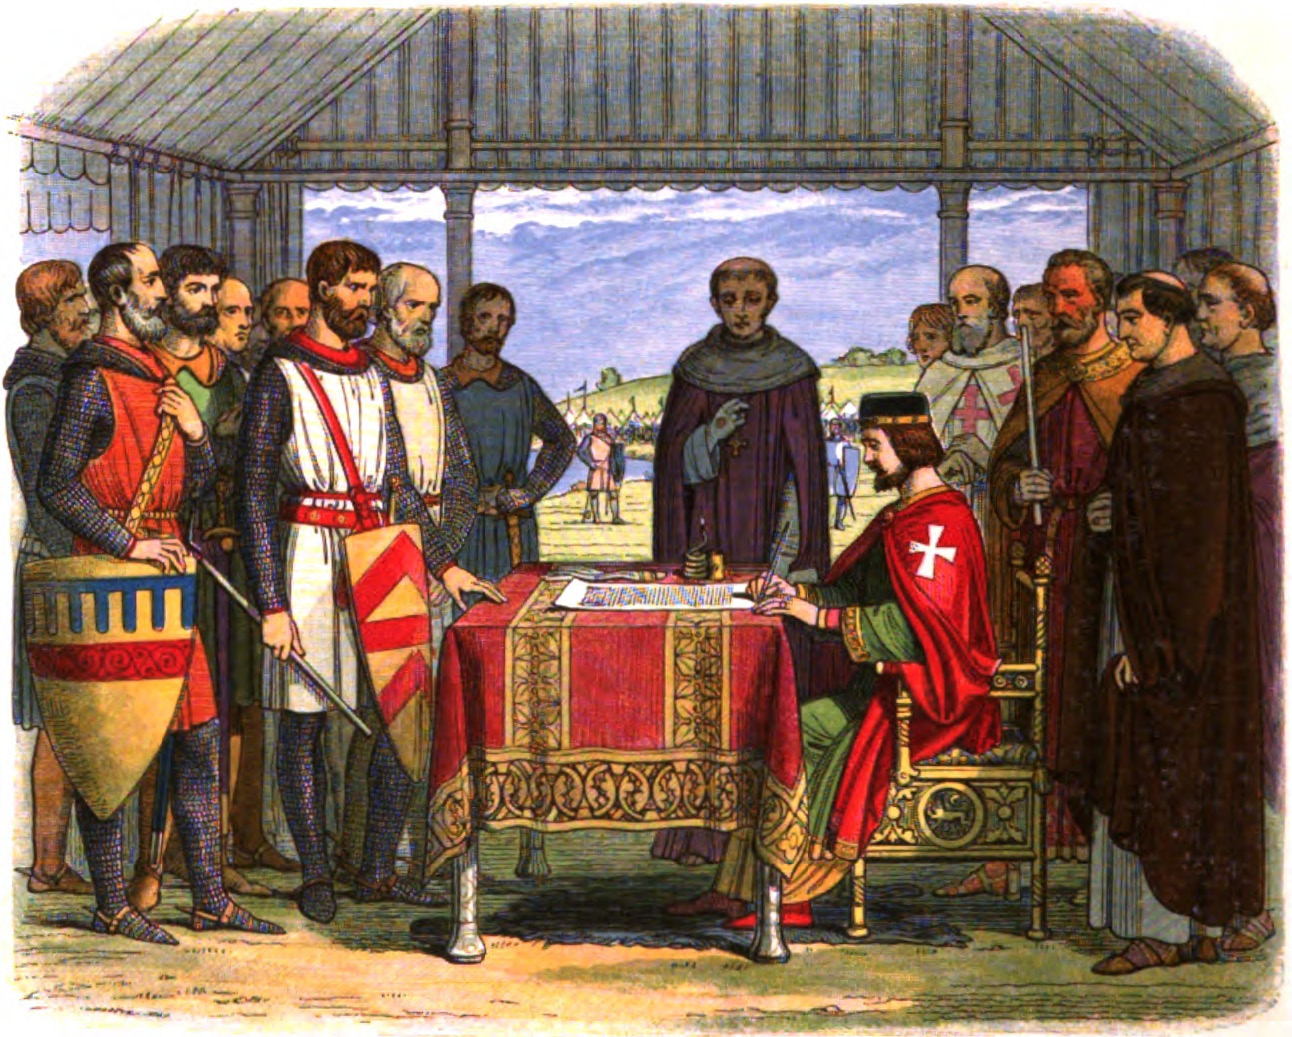  King John signs the Magna Carta by James Williams Edmund Doyle (author) and Edmund Evans (engraver)   Source  